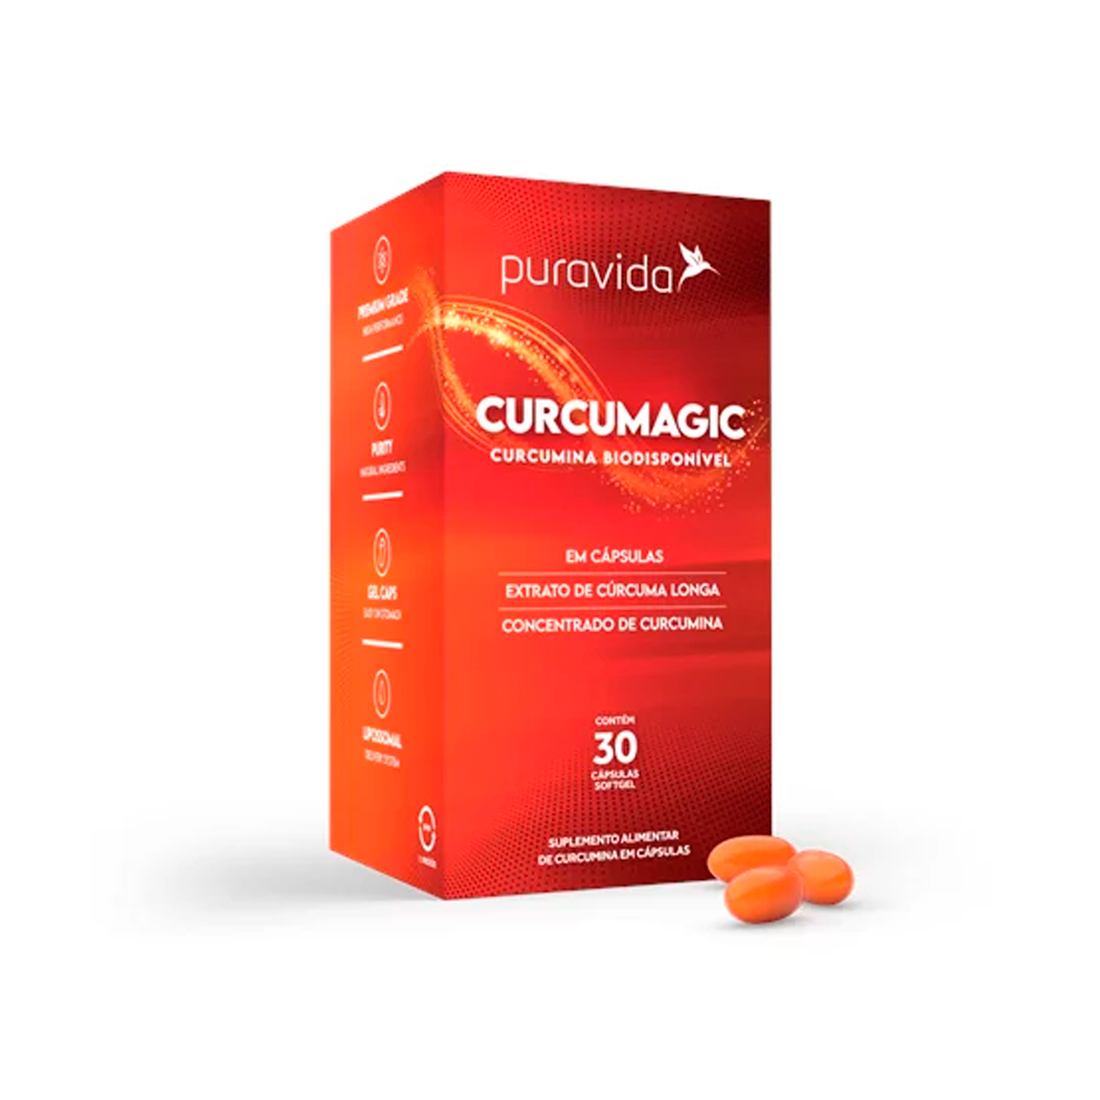 Curcumagic Curcumina Biodisponivel 30caps Puravida